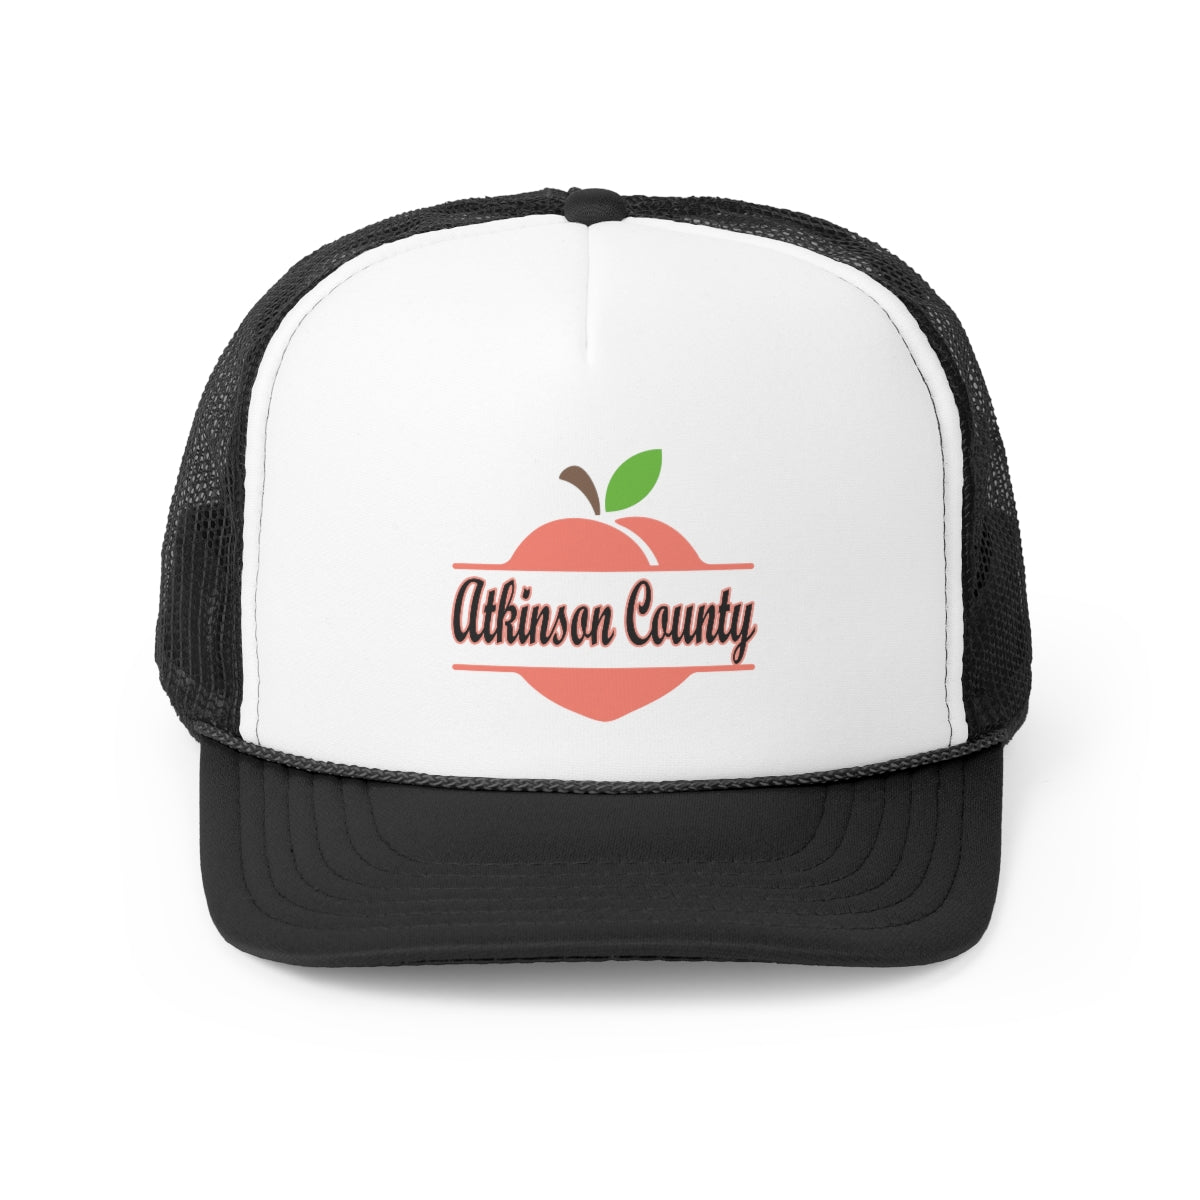 Atkinson County Georgia Trucker Cap